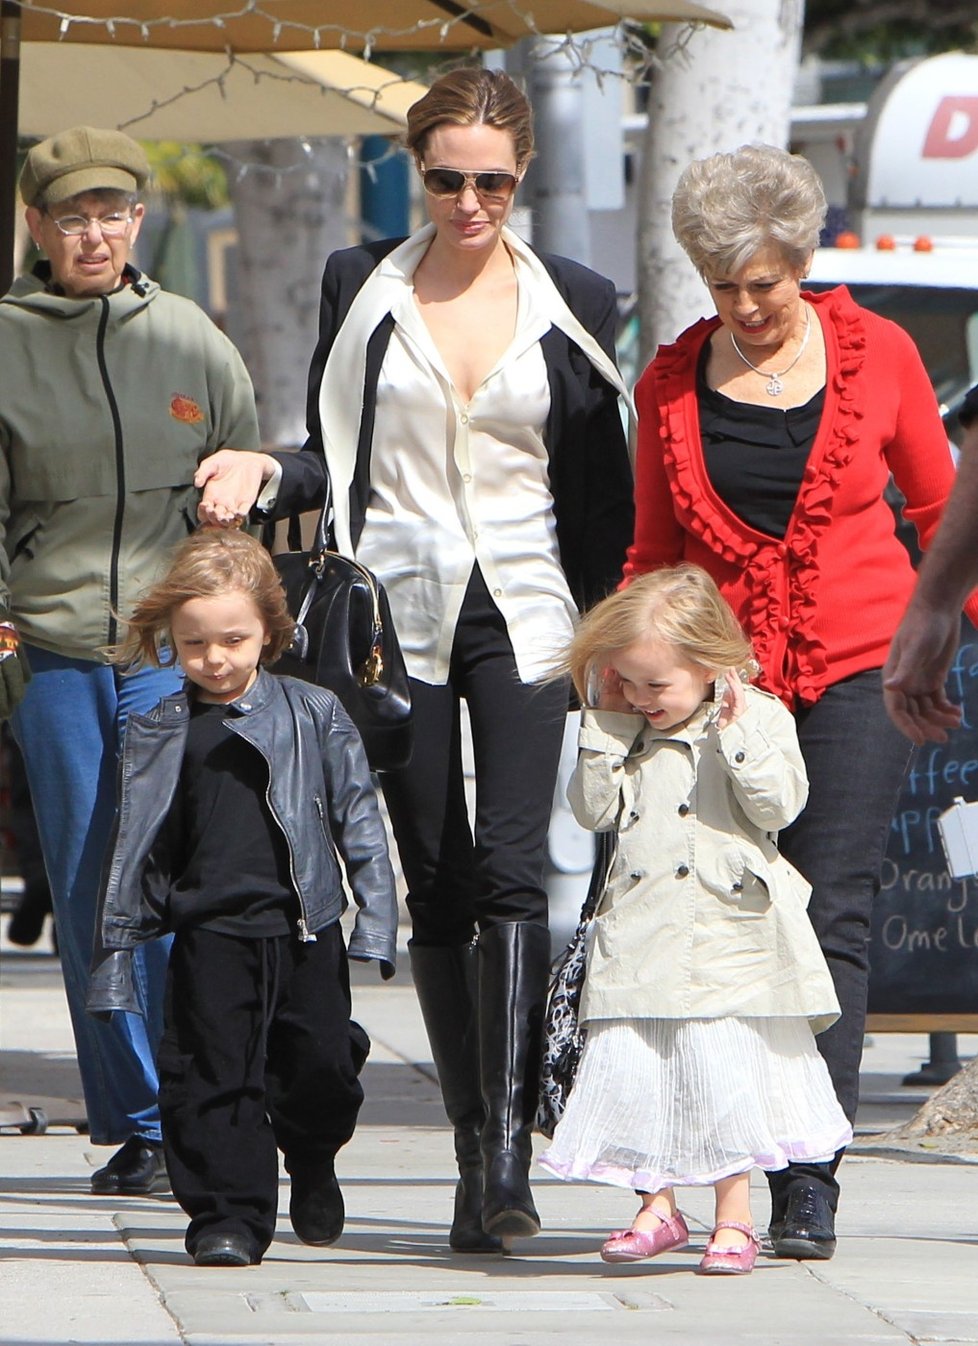 Angelina si vyšla na procházku s dvojčaty a maminkou svého partnera Brada Pitta